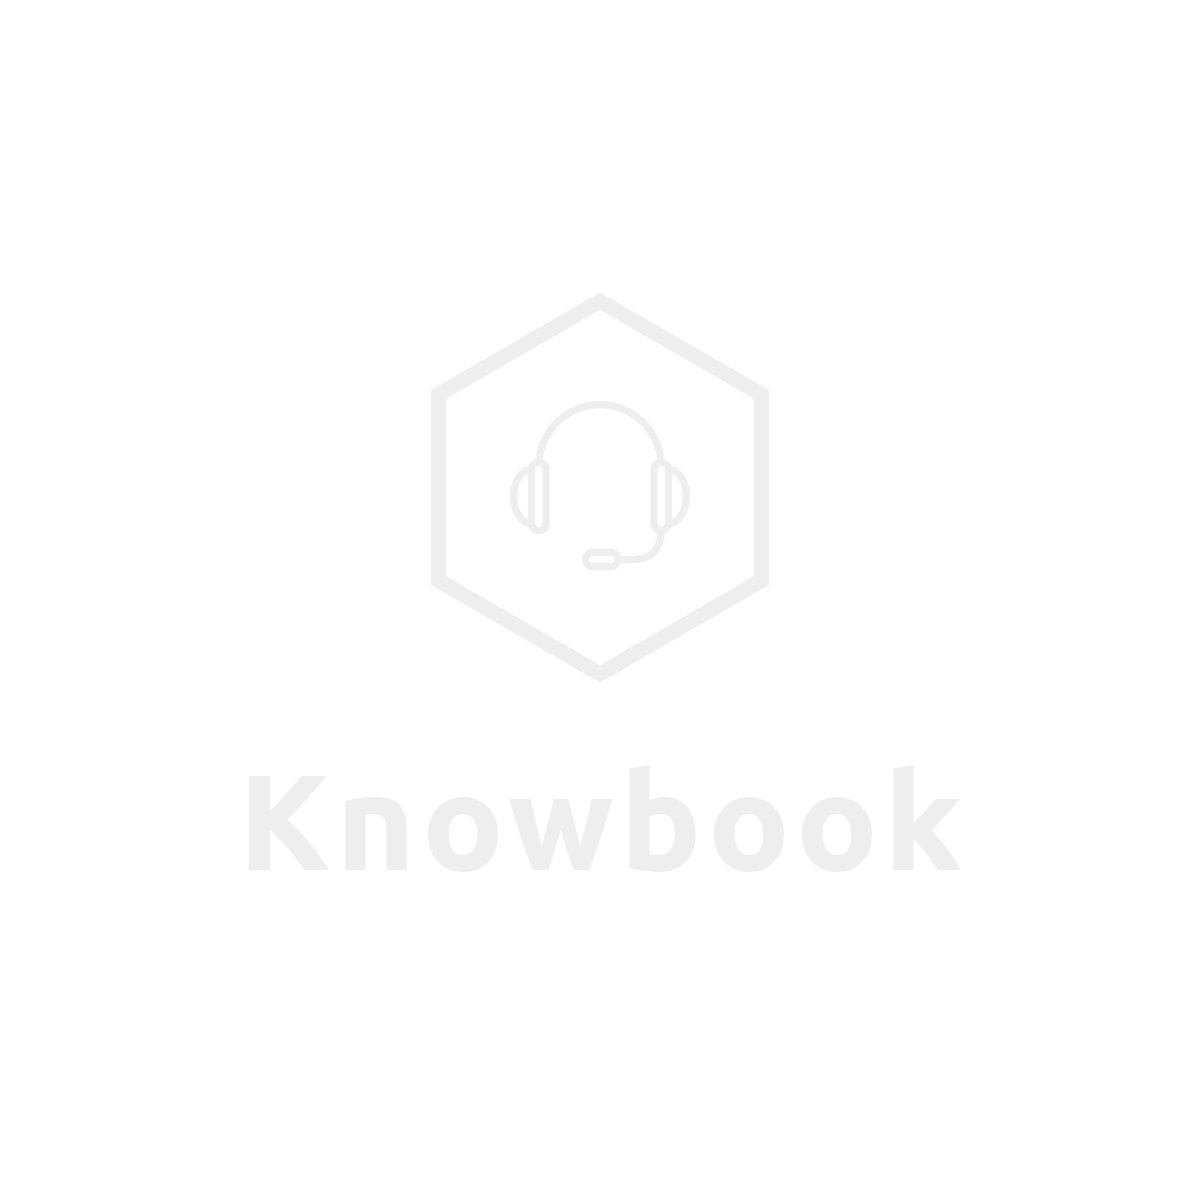 The Knowbook